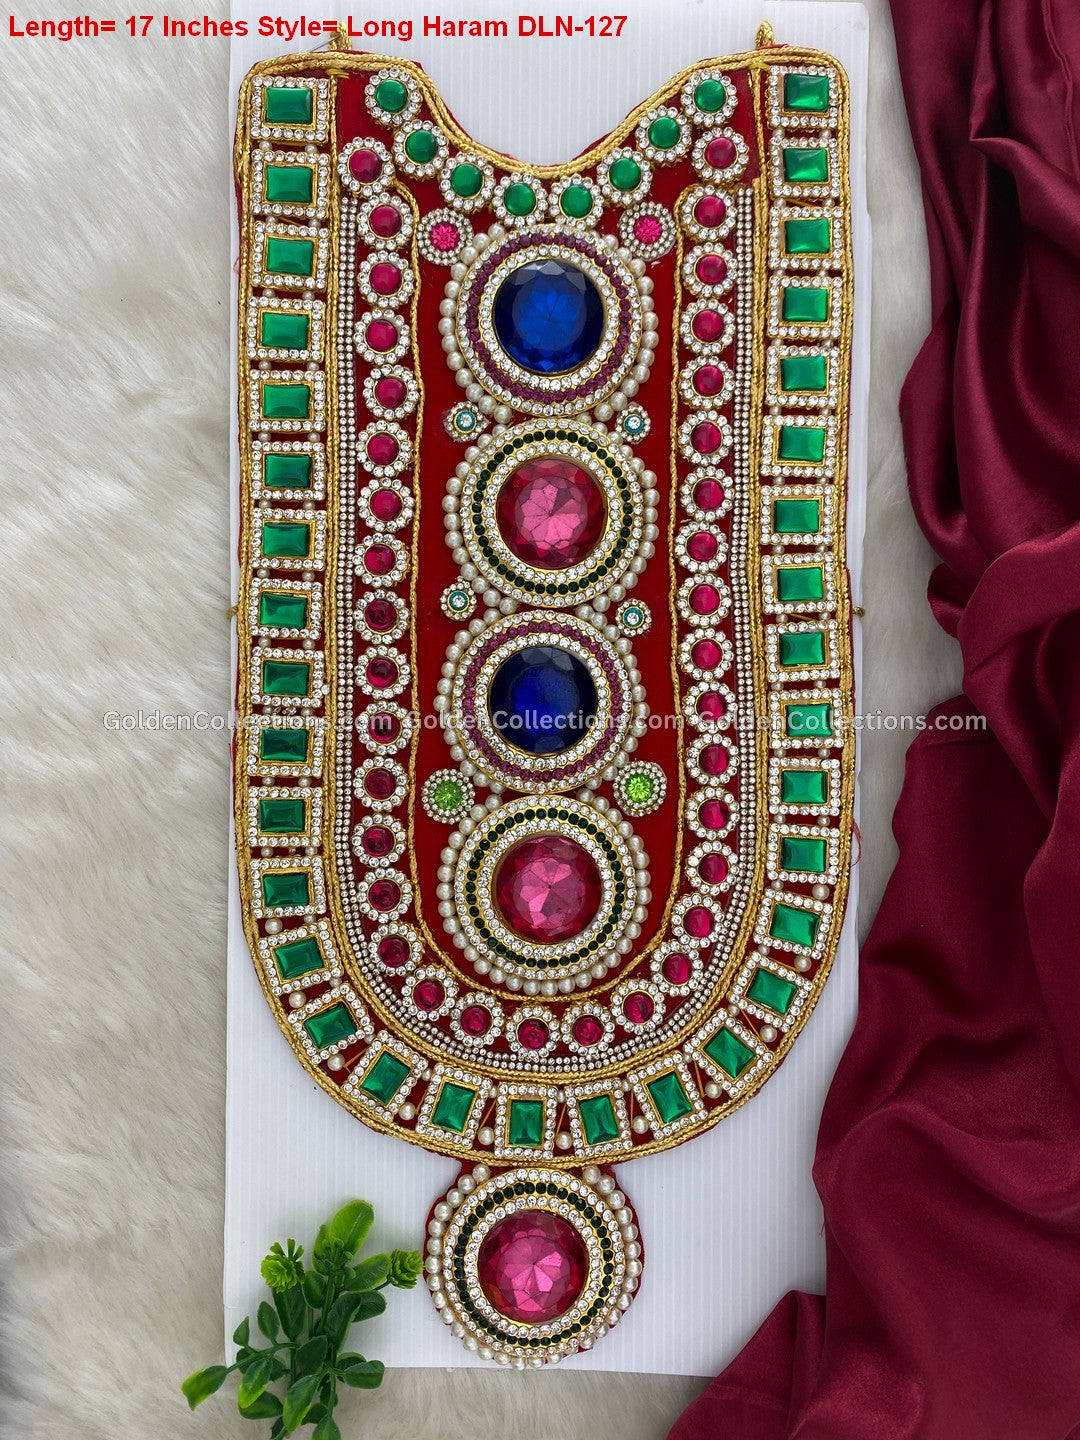 Goddess Lakshmi Long Necklace: Divine Beauty Unveiled DLN-127